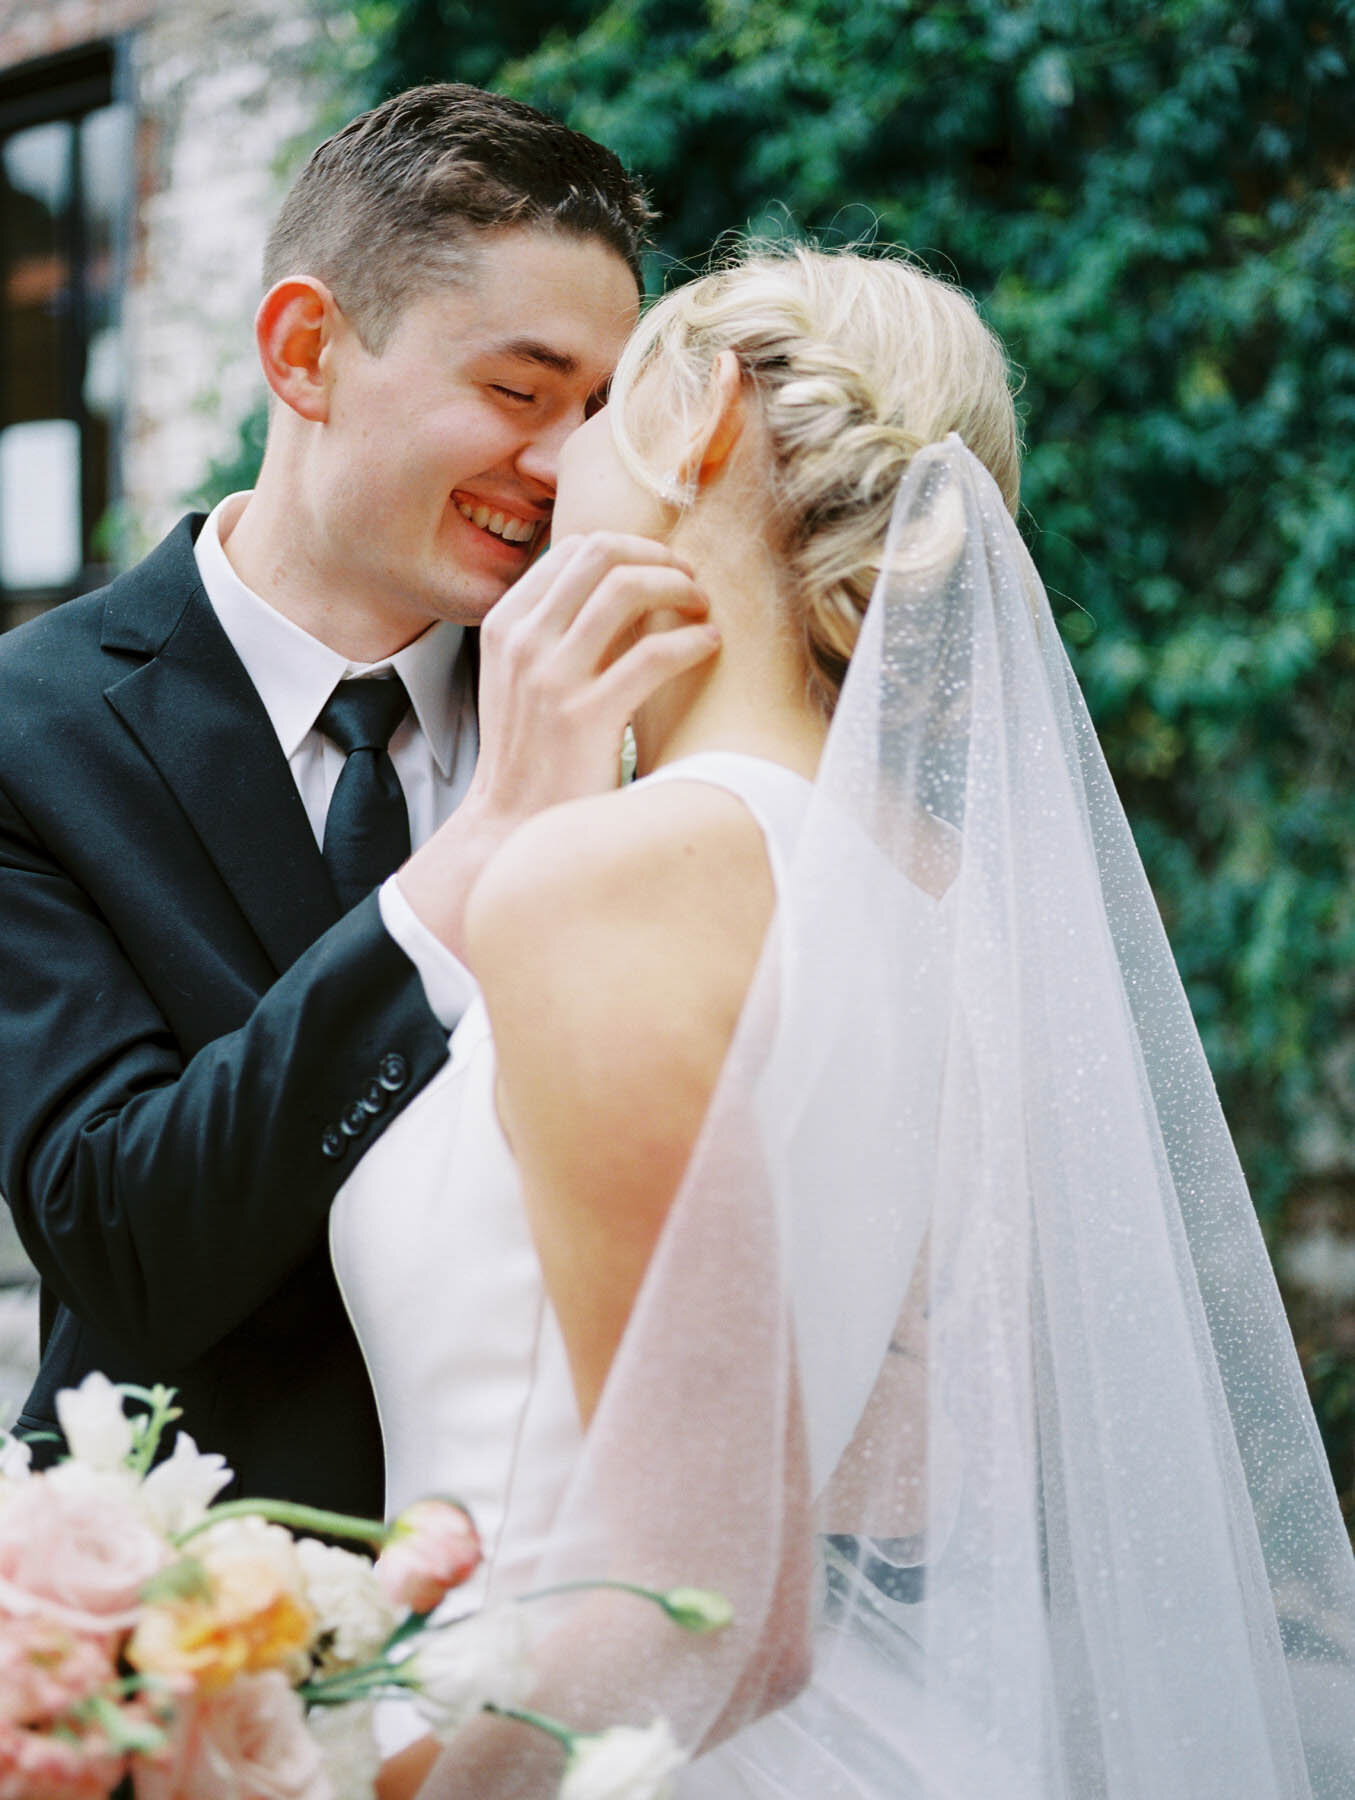 Lynchburg-wedding-weddingphotographer-film-atelier-mircowedding-love-lynchburgphotographer-31.jpg